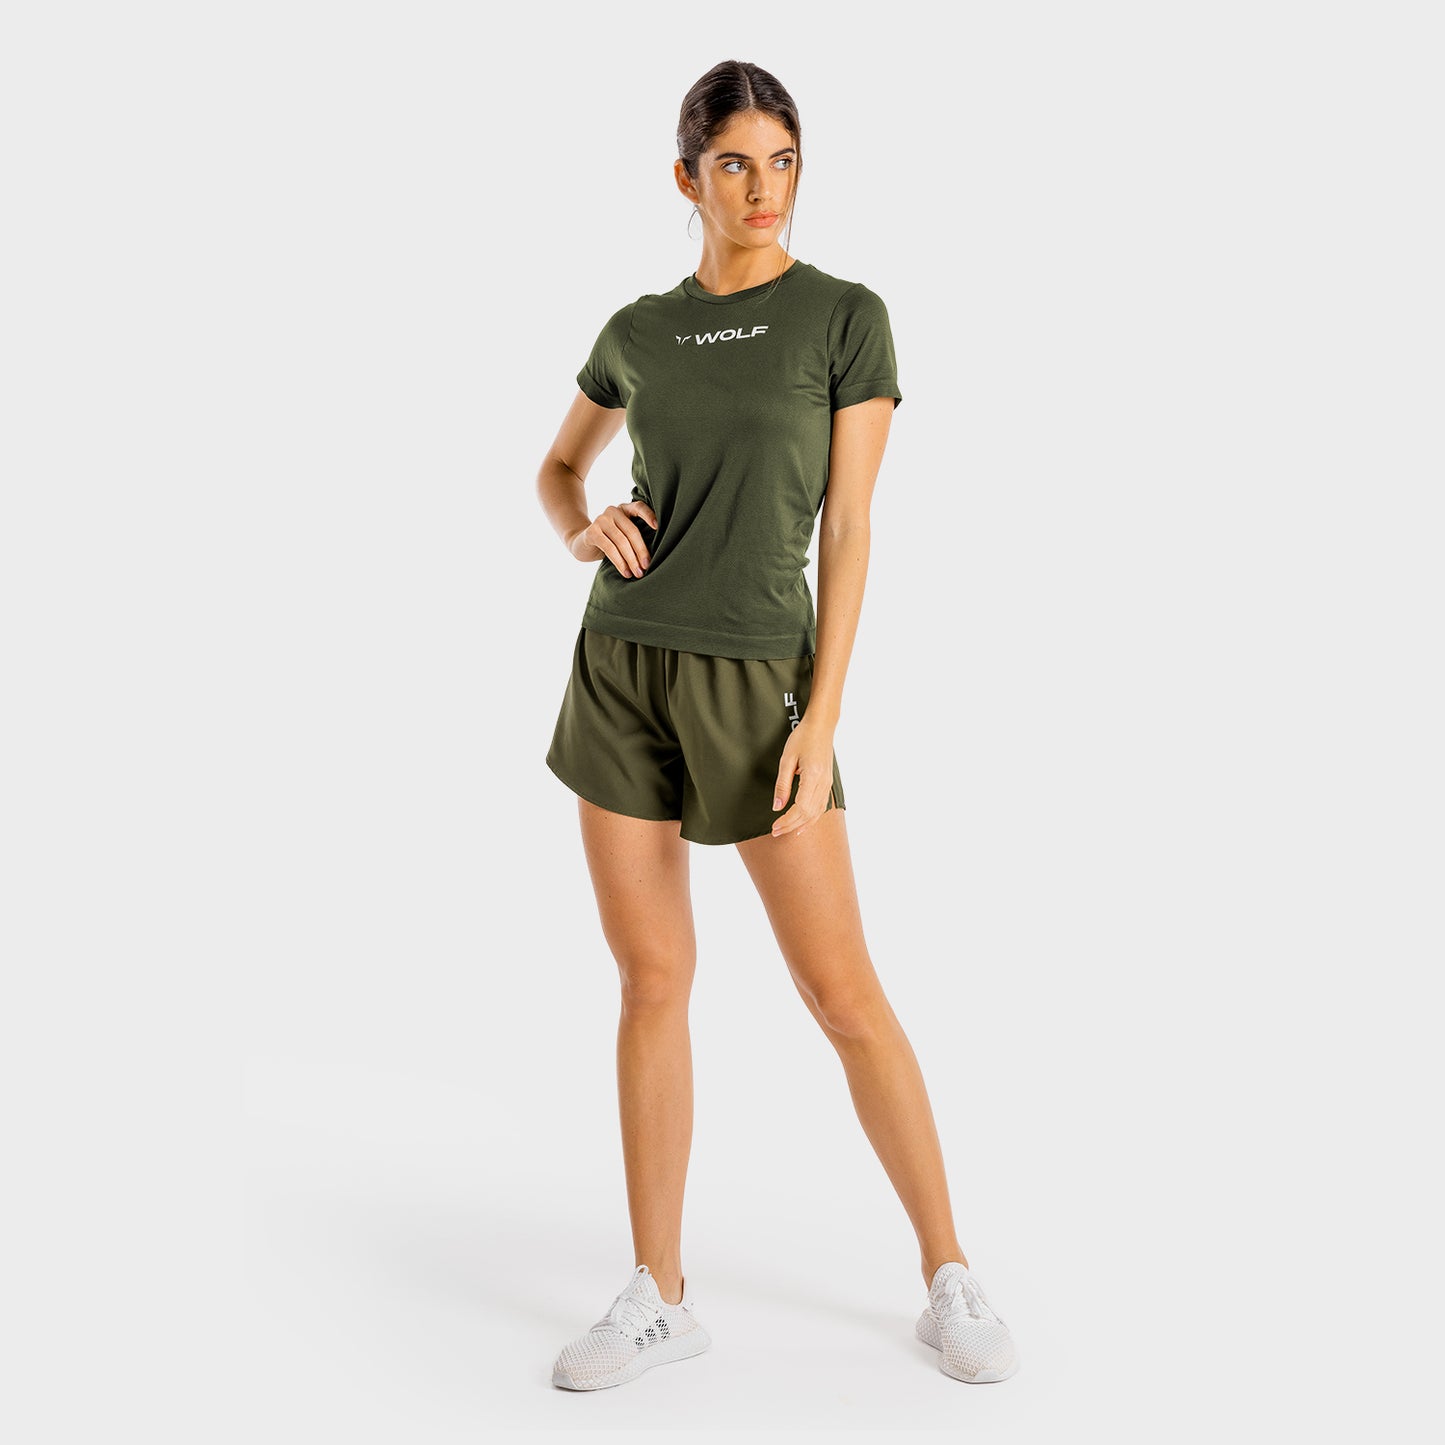 squatwolf-gym-t-shirts-for-women-primal-tee-khaki-workout-clothes